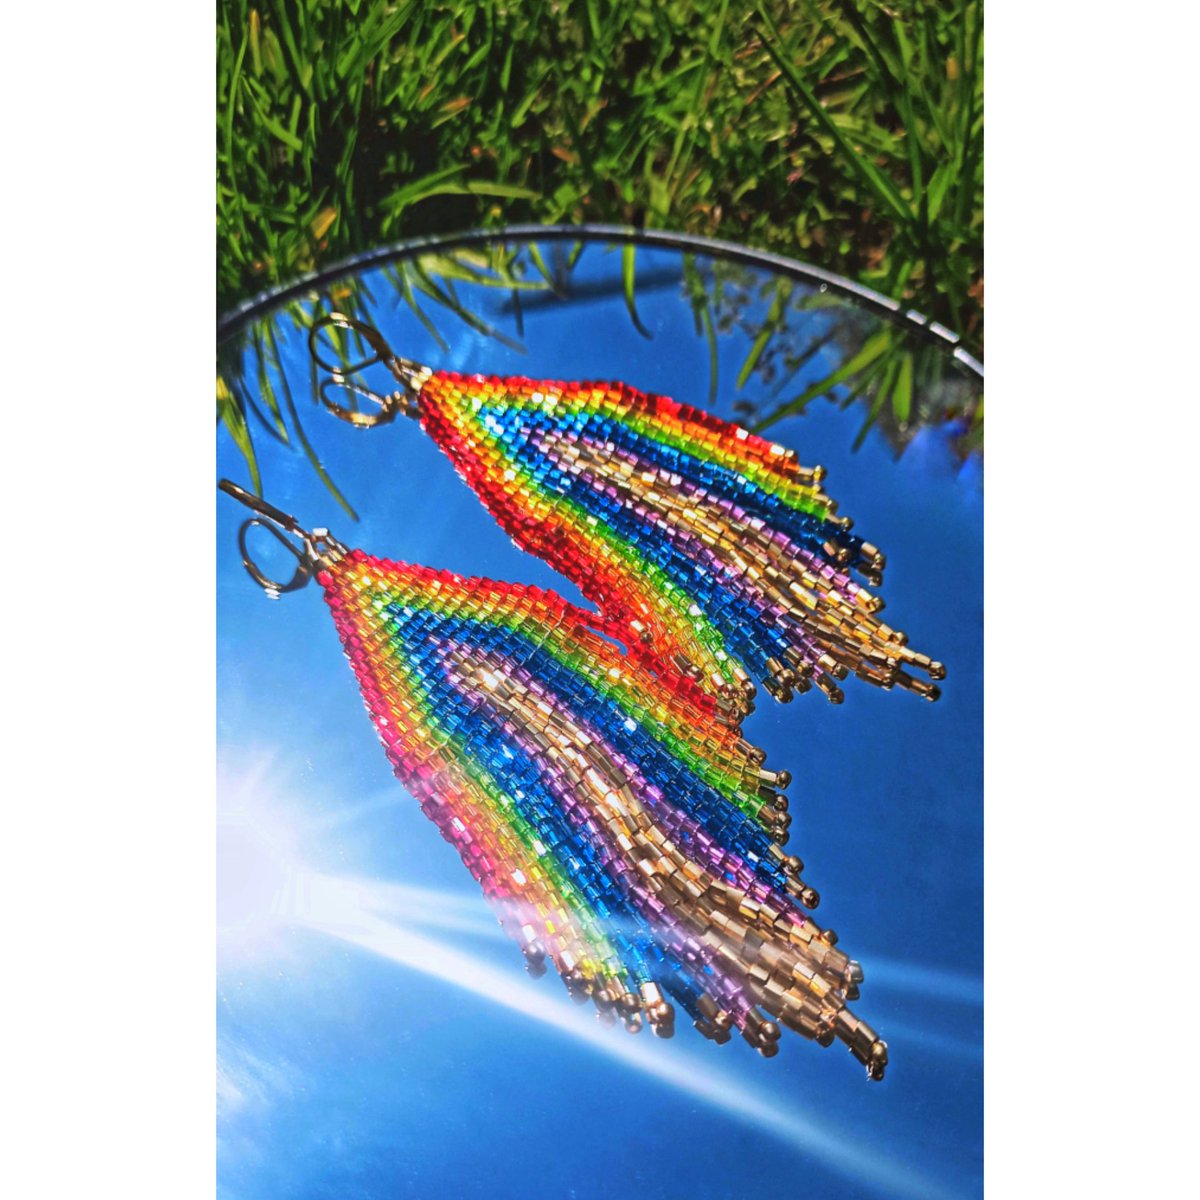 Shine bright like a Rainbow 🌈
#rainbow #earrings #beadwork #fringeearrings #rainbowearrings #jewelry #etsyhandmade #boho #hippie #sky #animals #etsy #sparkly #beadedearring #seedbead #handmade #pride #etsyjewelry #mhhsbd #Alien_Family